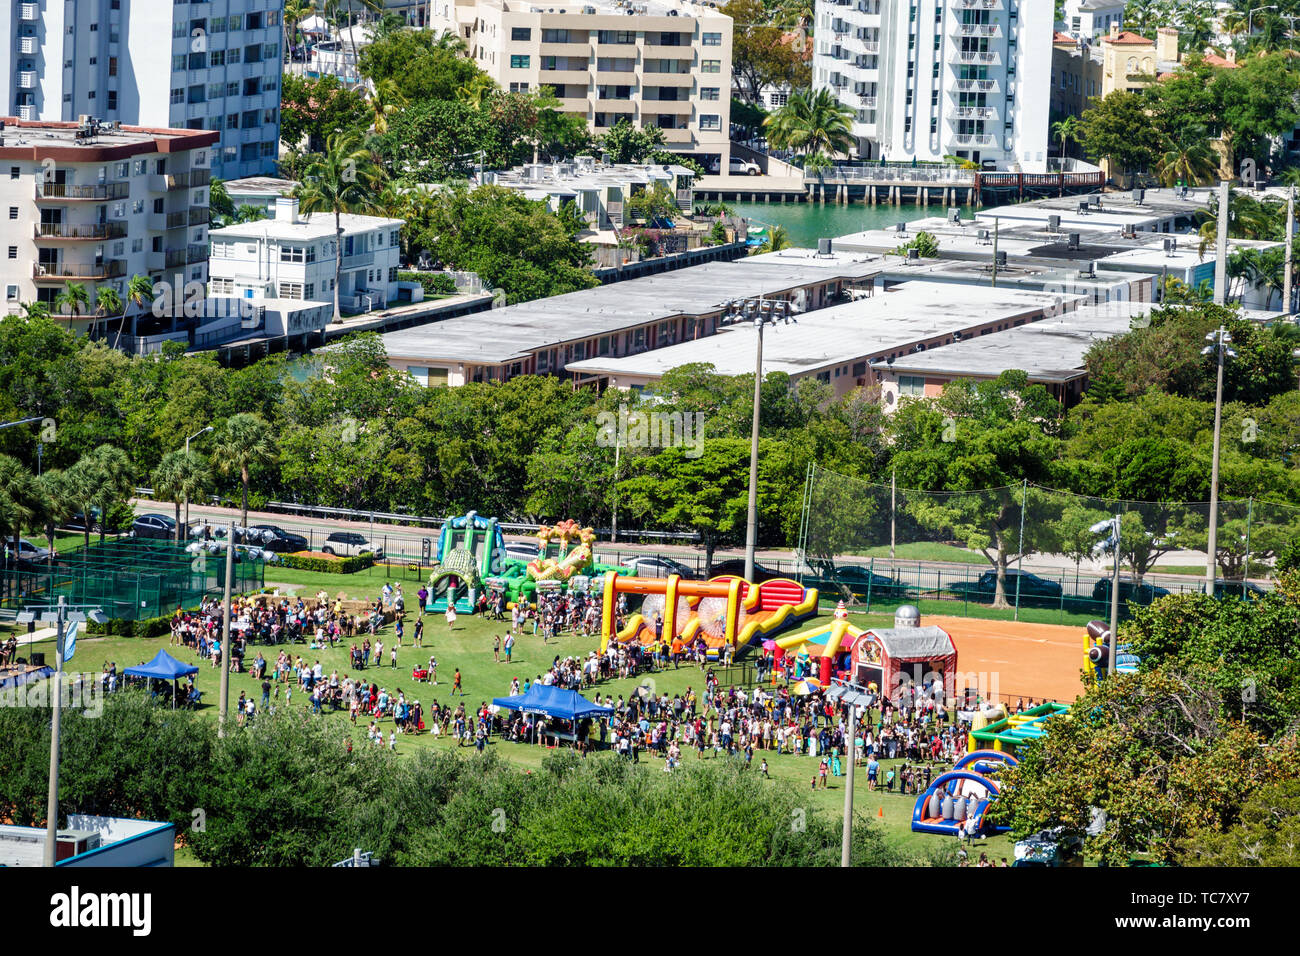 Miami Beach Florida,North Beach,North Shore Park,Spring Eggstravaganza,community fair,inflatable slides slide bounce house houses,FL190430069 Stock Photo